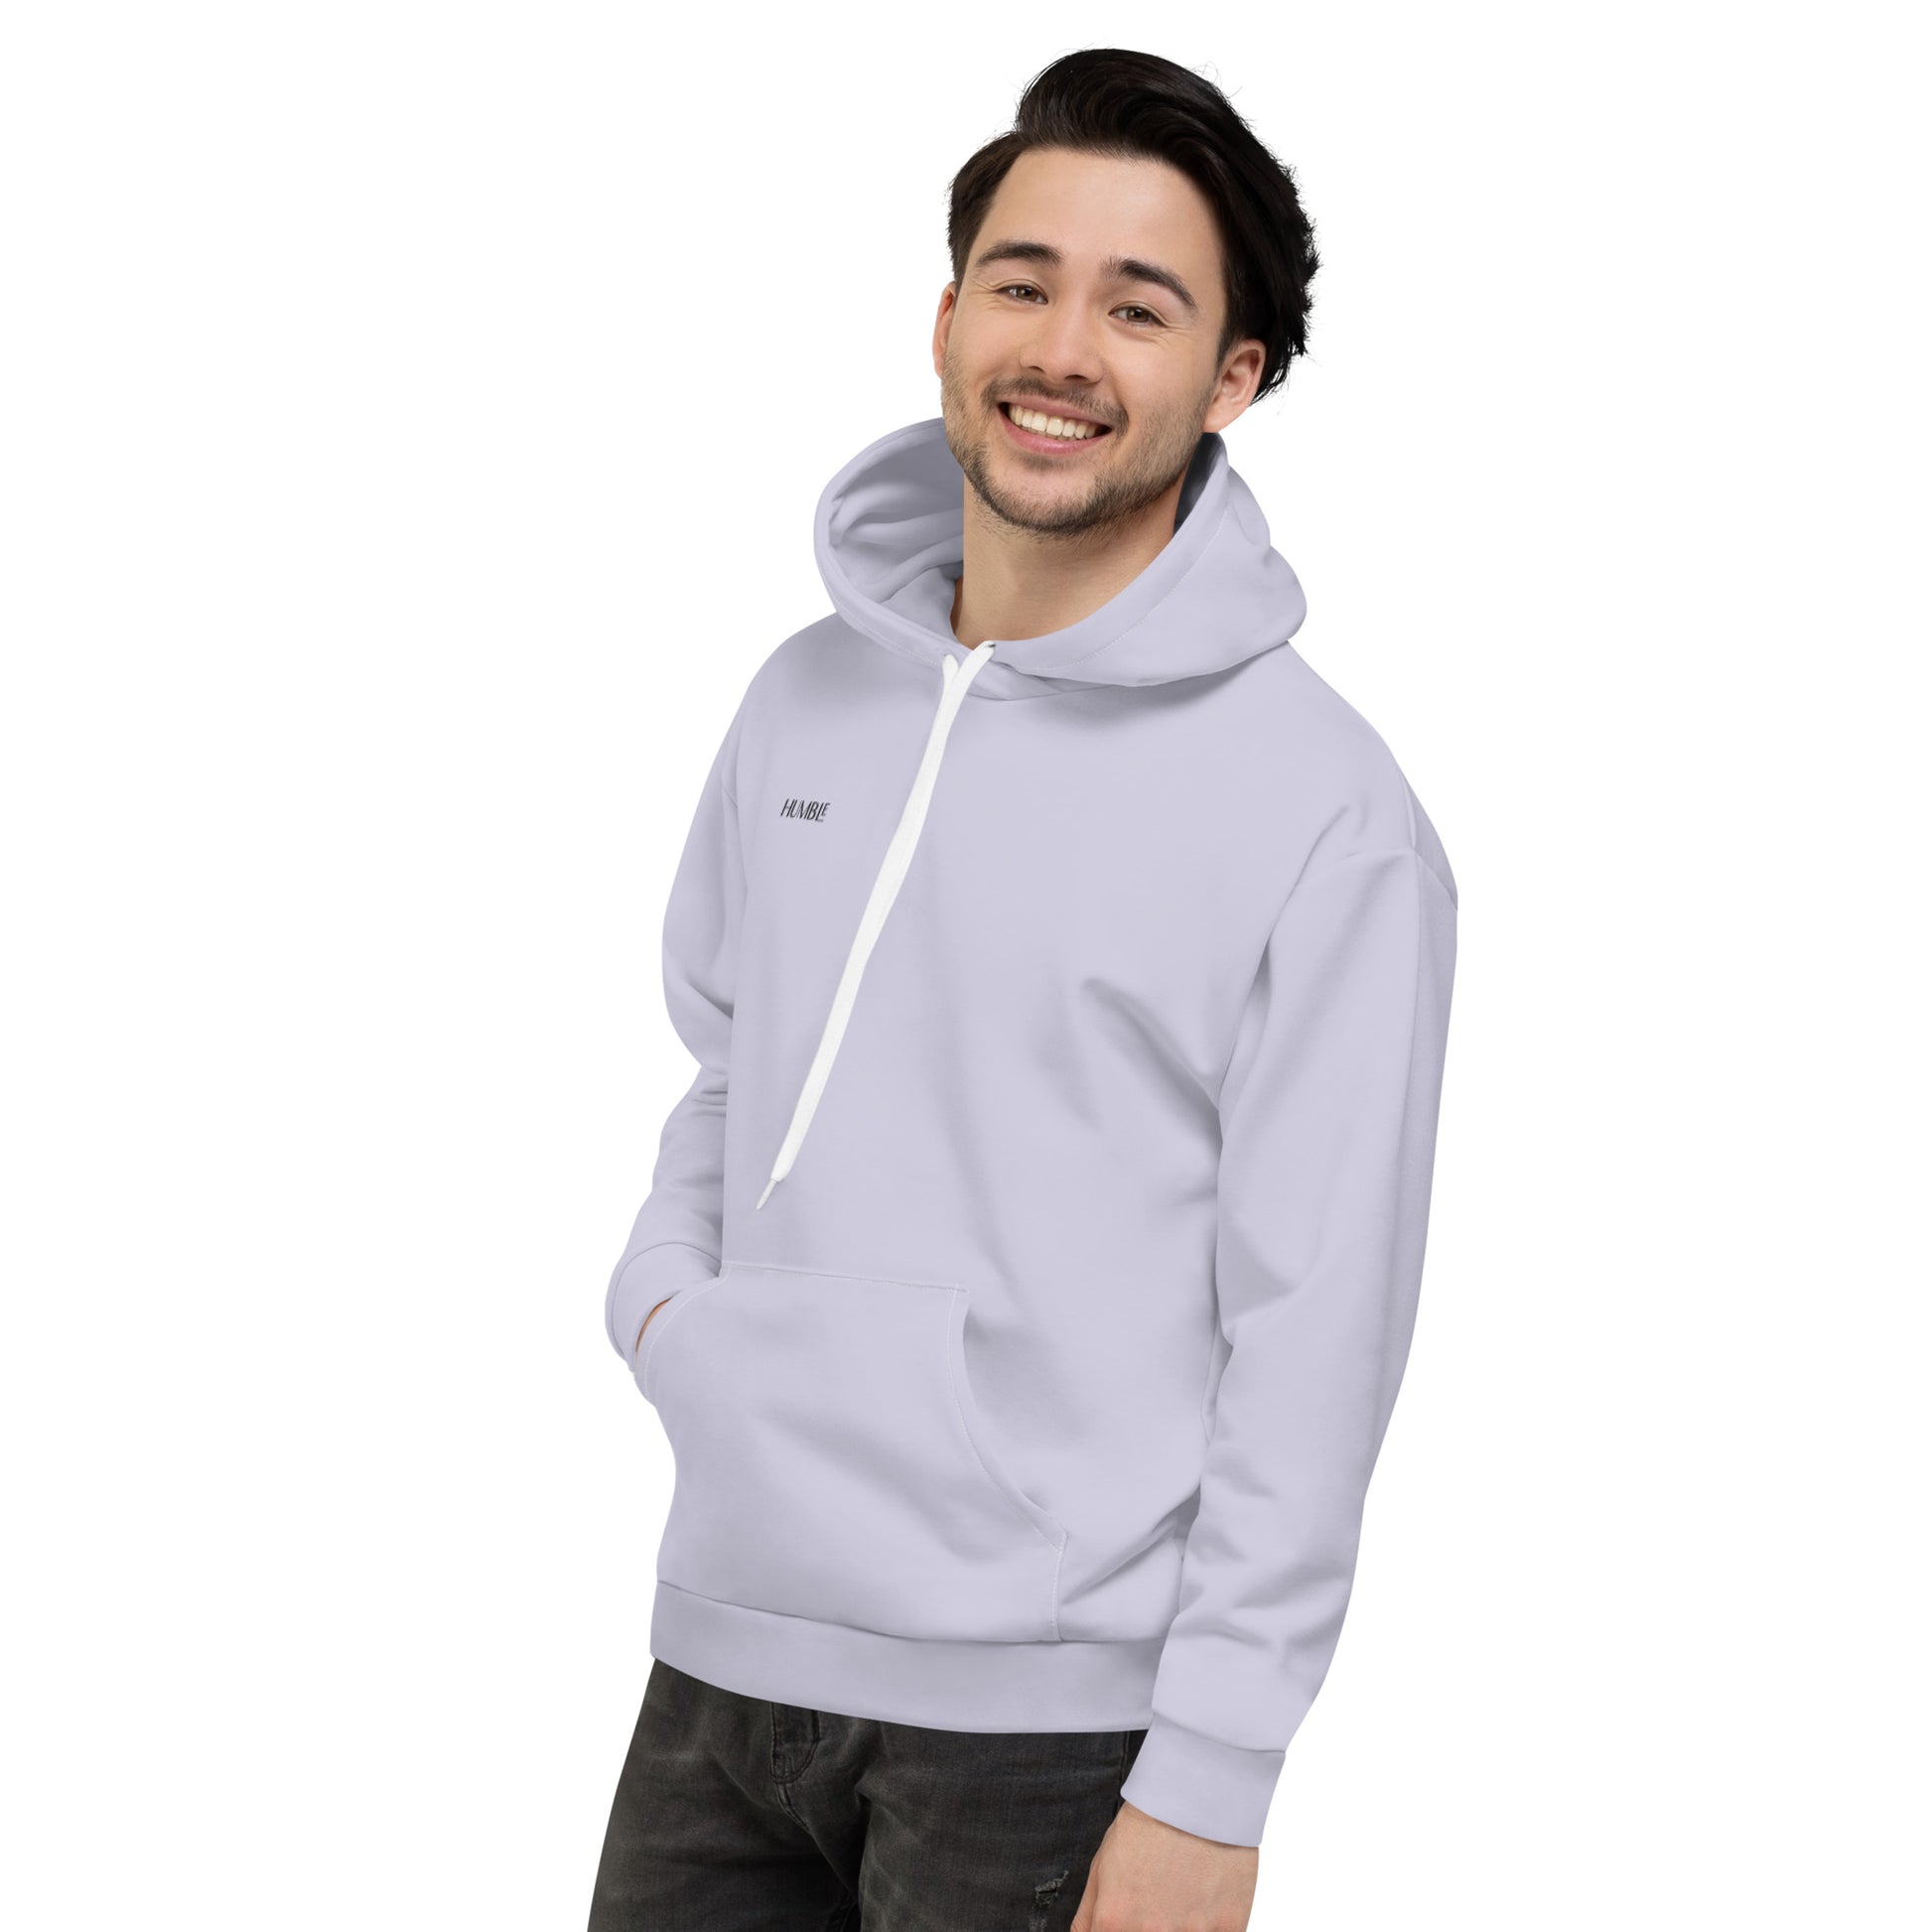 Humble Sportswear, men’s hoodies, men’s brushed fleece hoodies, relaxed fit hoodies for men, color match hoodies